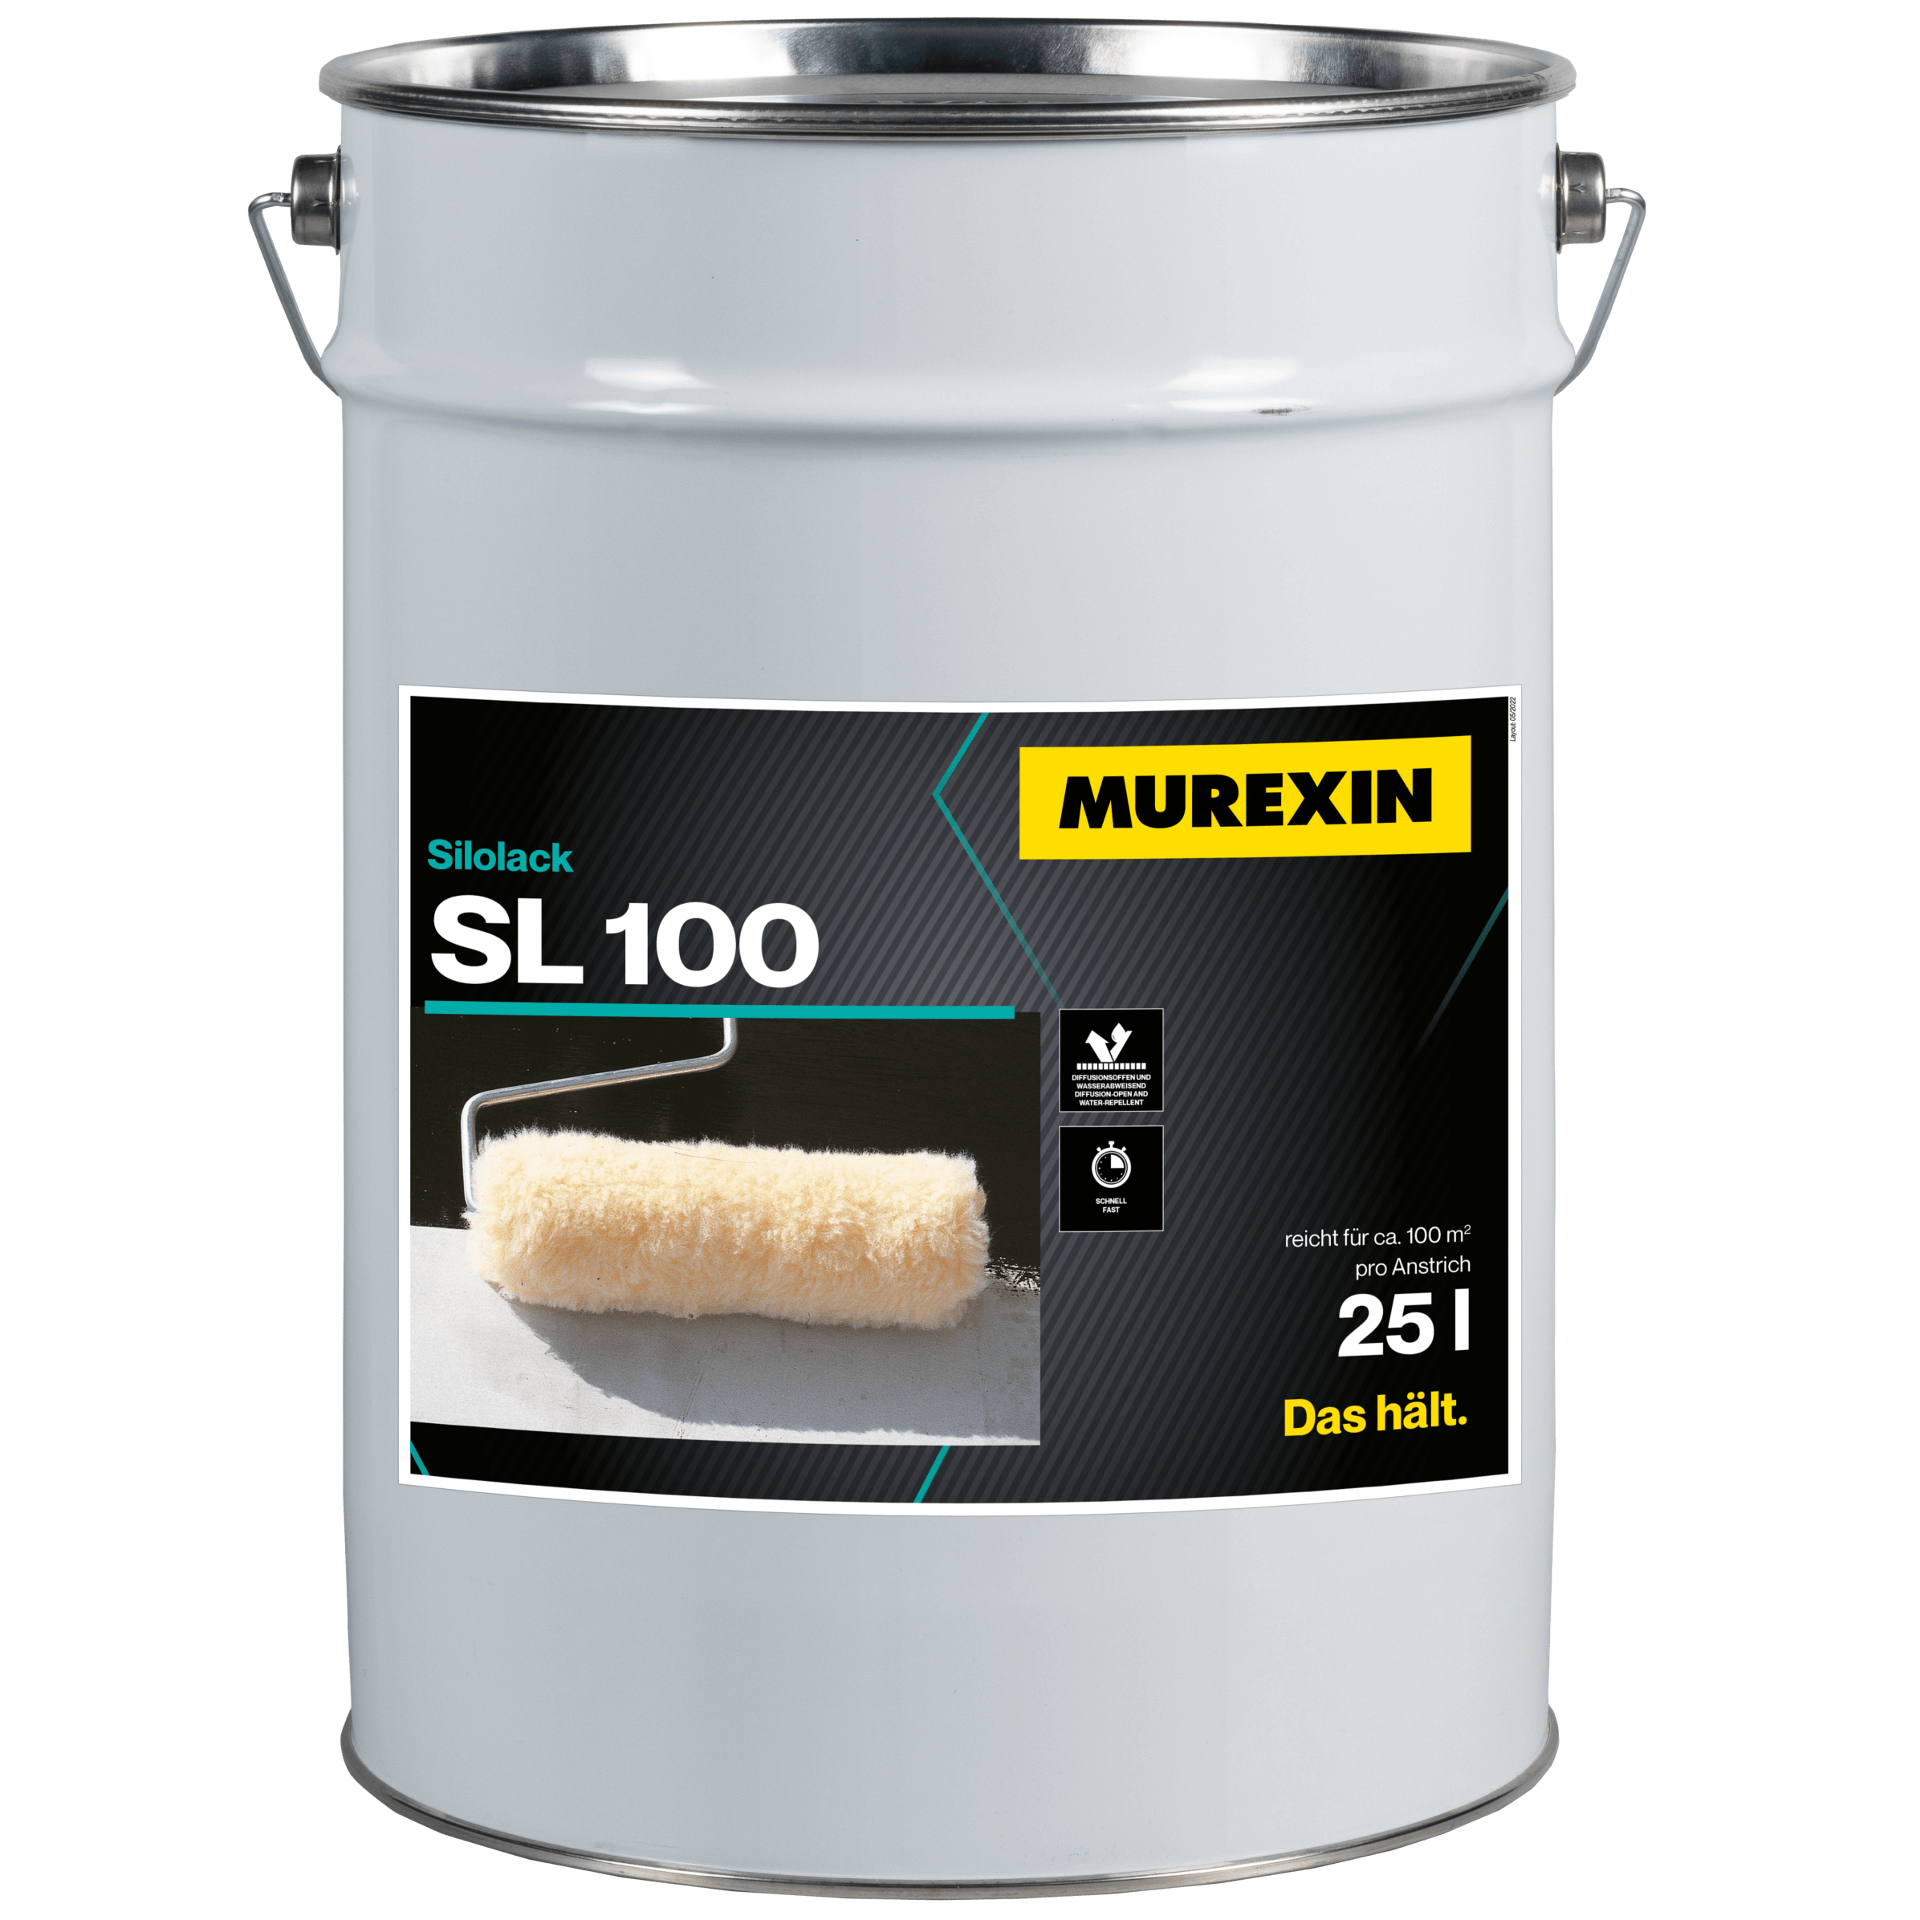 Izolatie silozuri Murexin SL 100